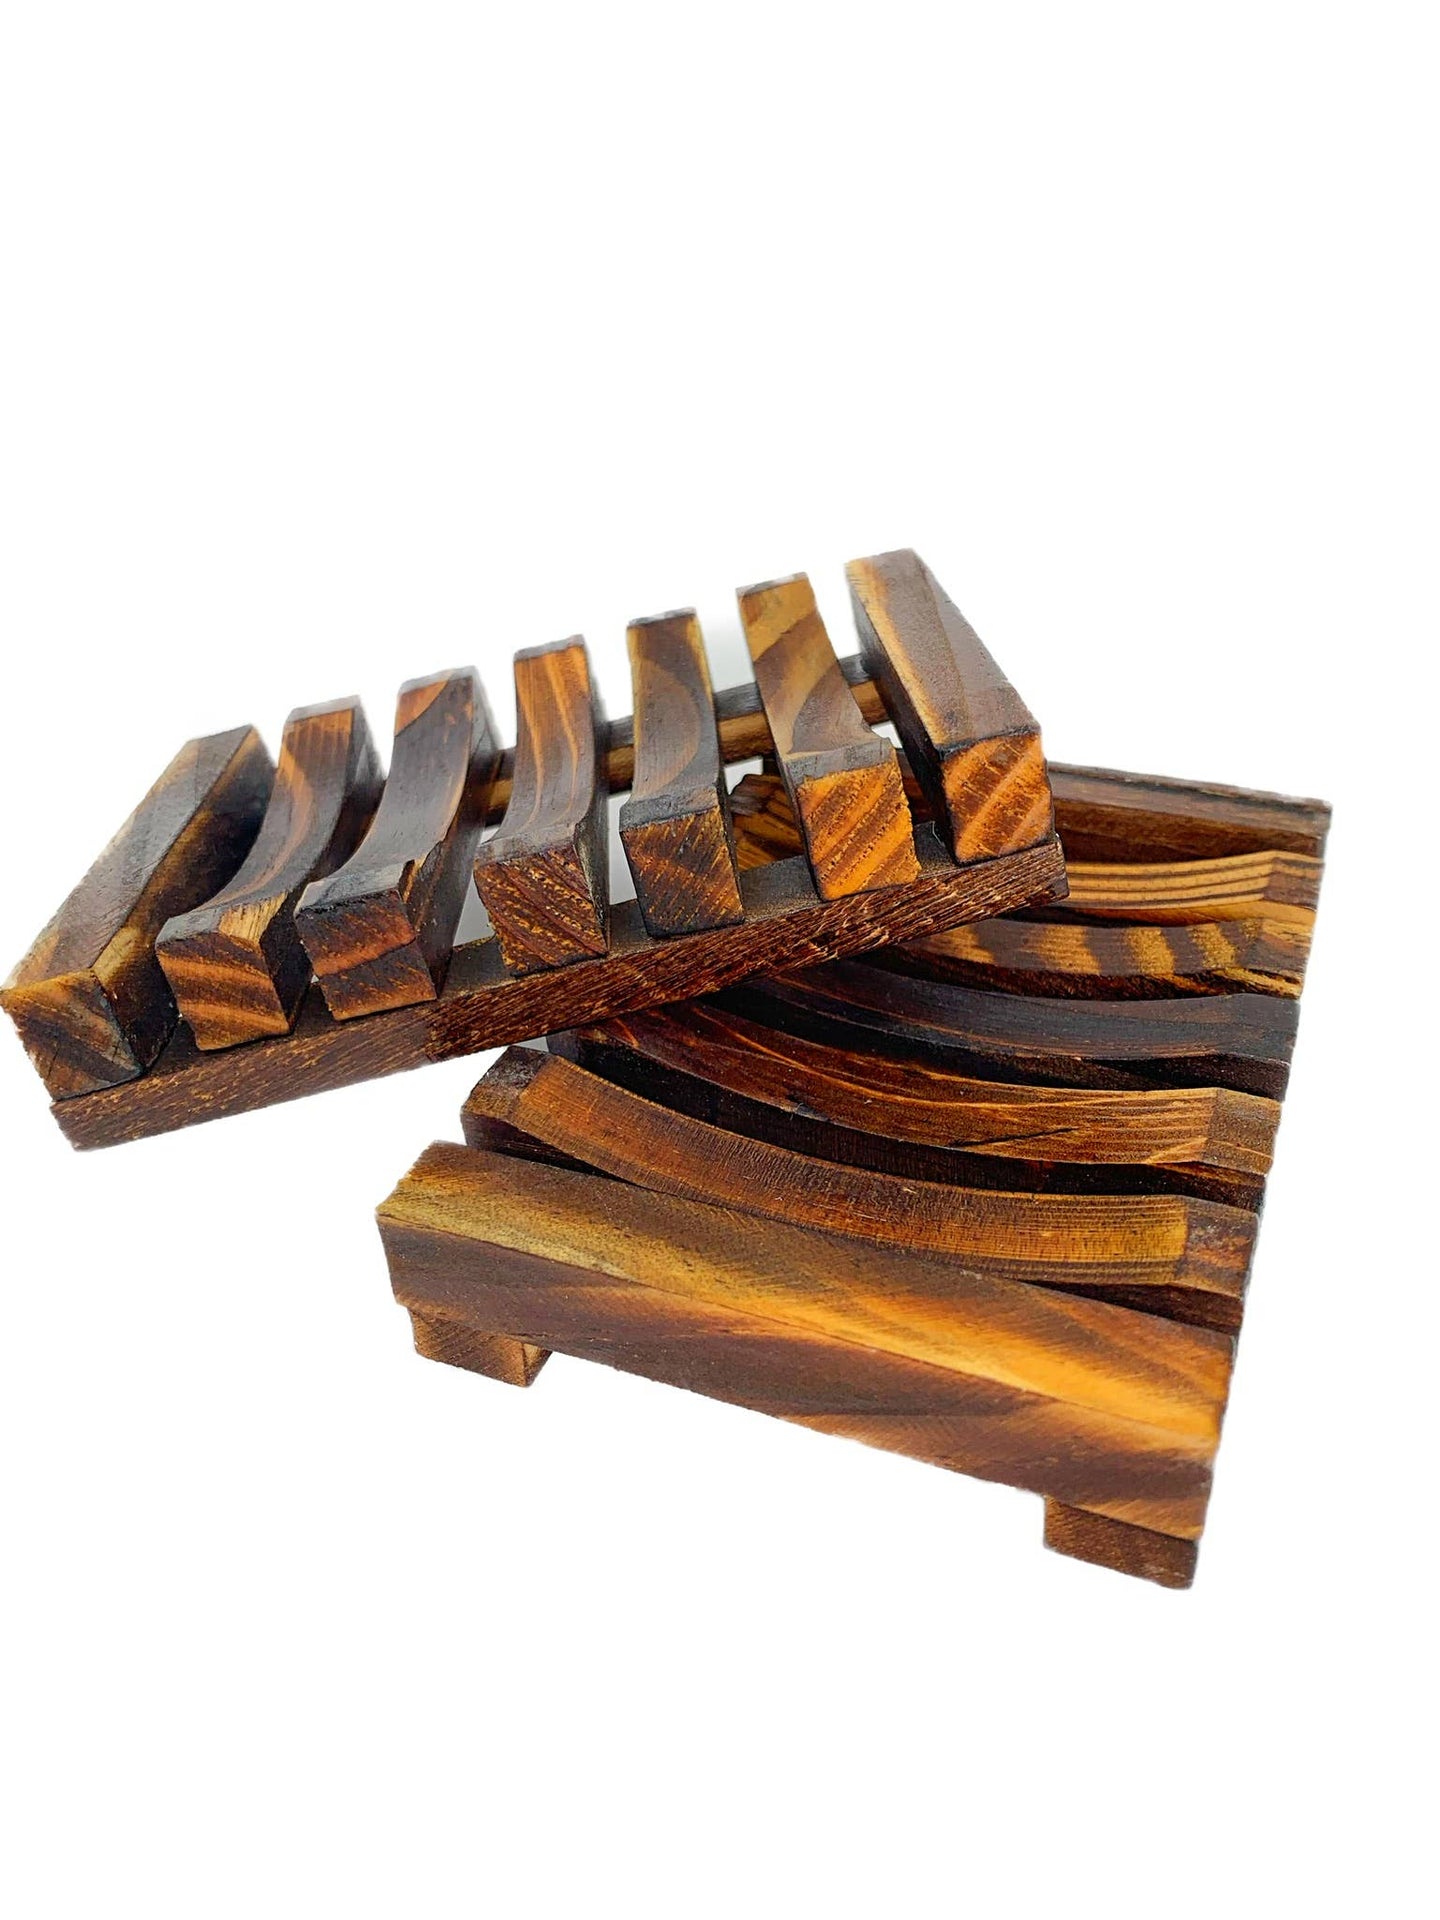 Wooden Bamboo Soap Dish